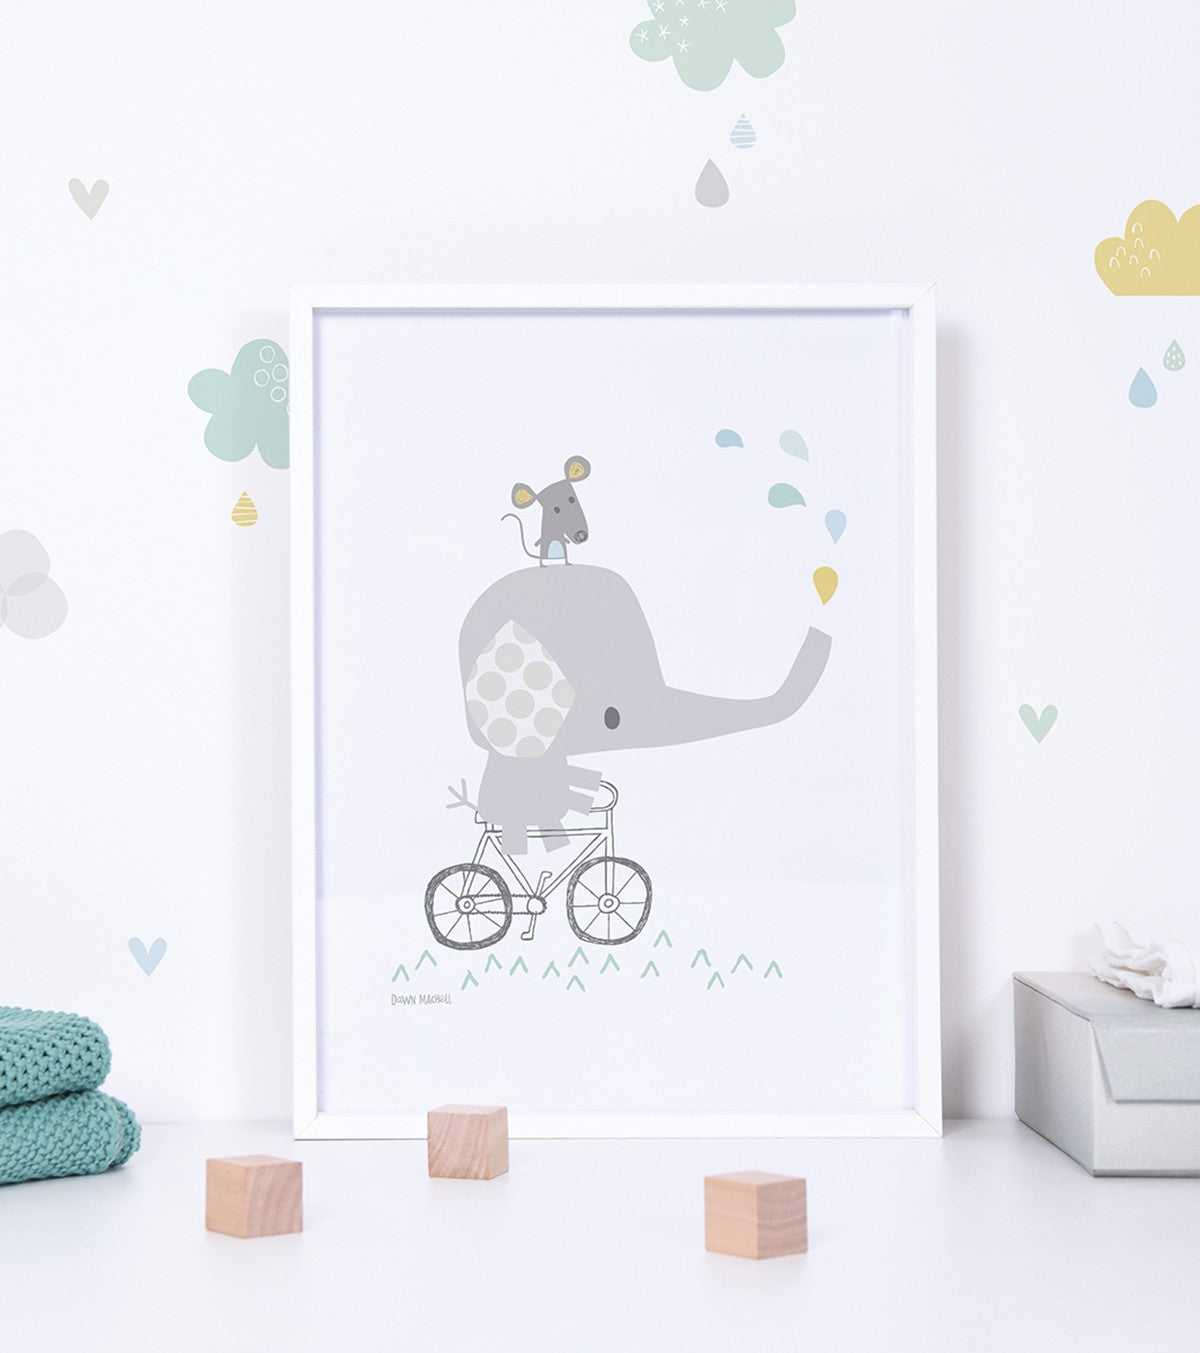 SMILE IT'S RAINING - Kinderposter - Elefant auf seinem Fahrrad